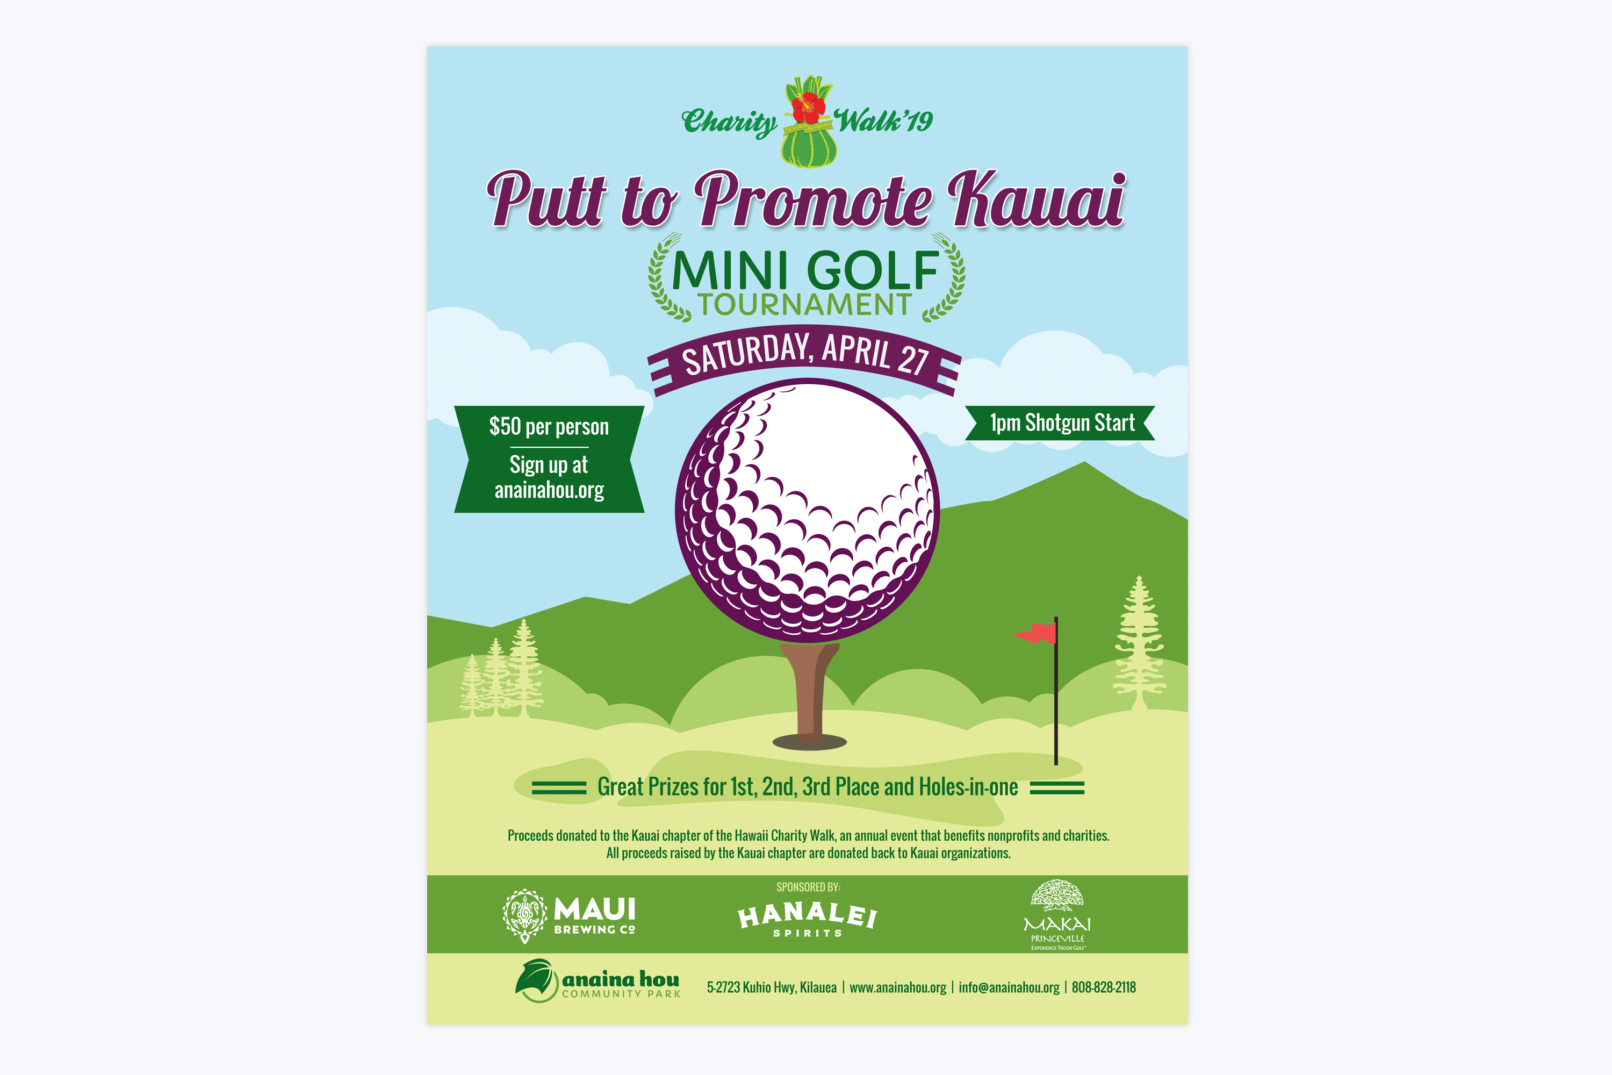 putt to promote kauai poster design